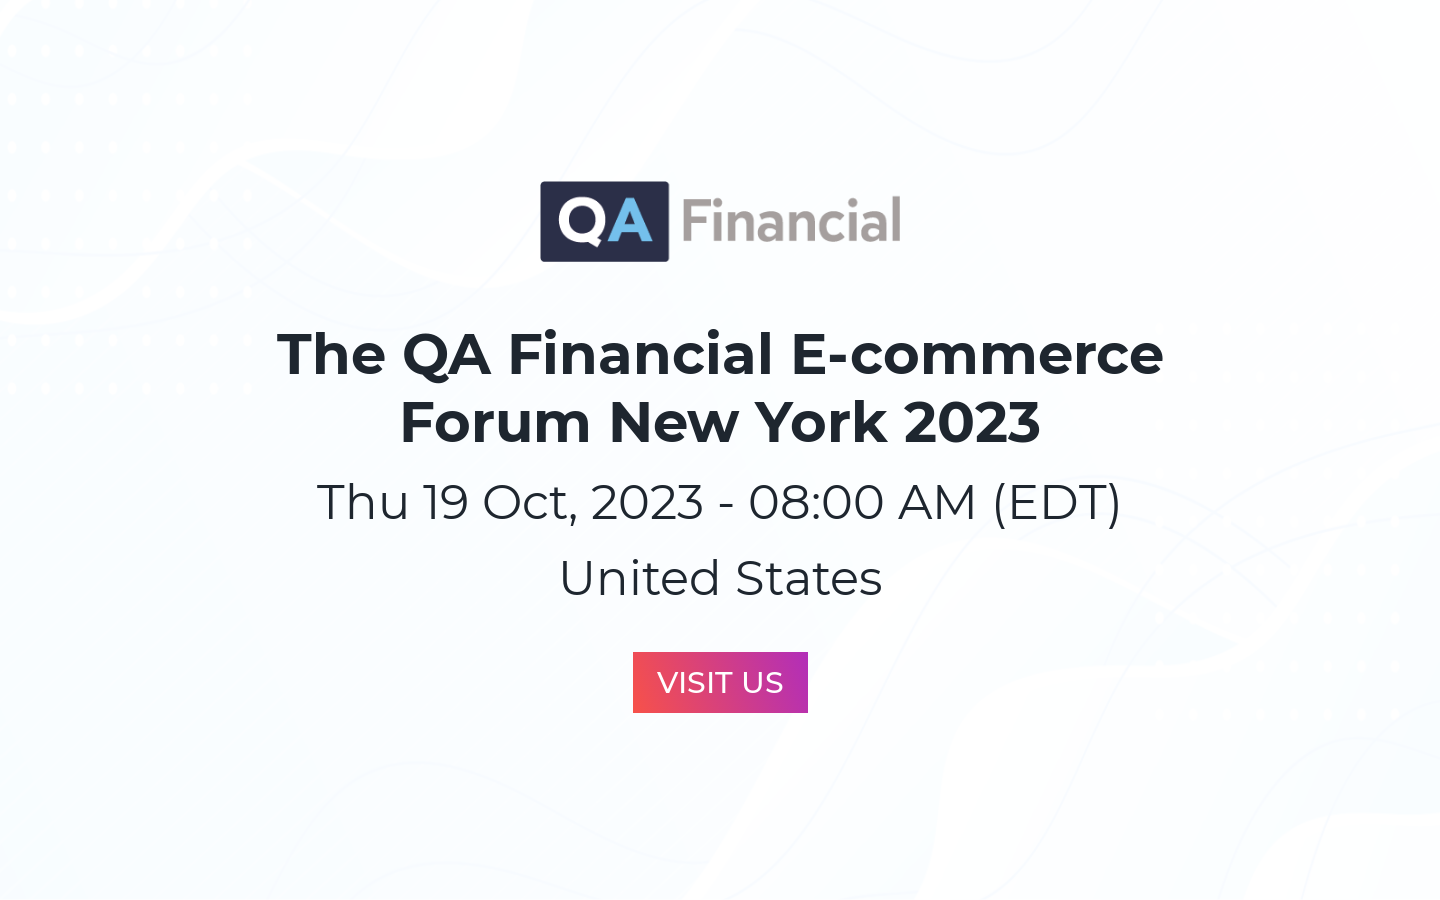 The QA Financial Forum New York 2023